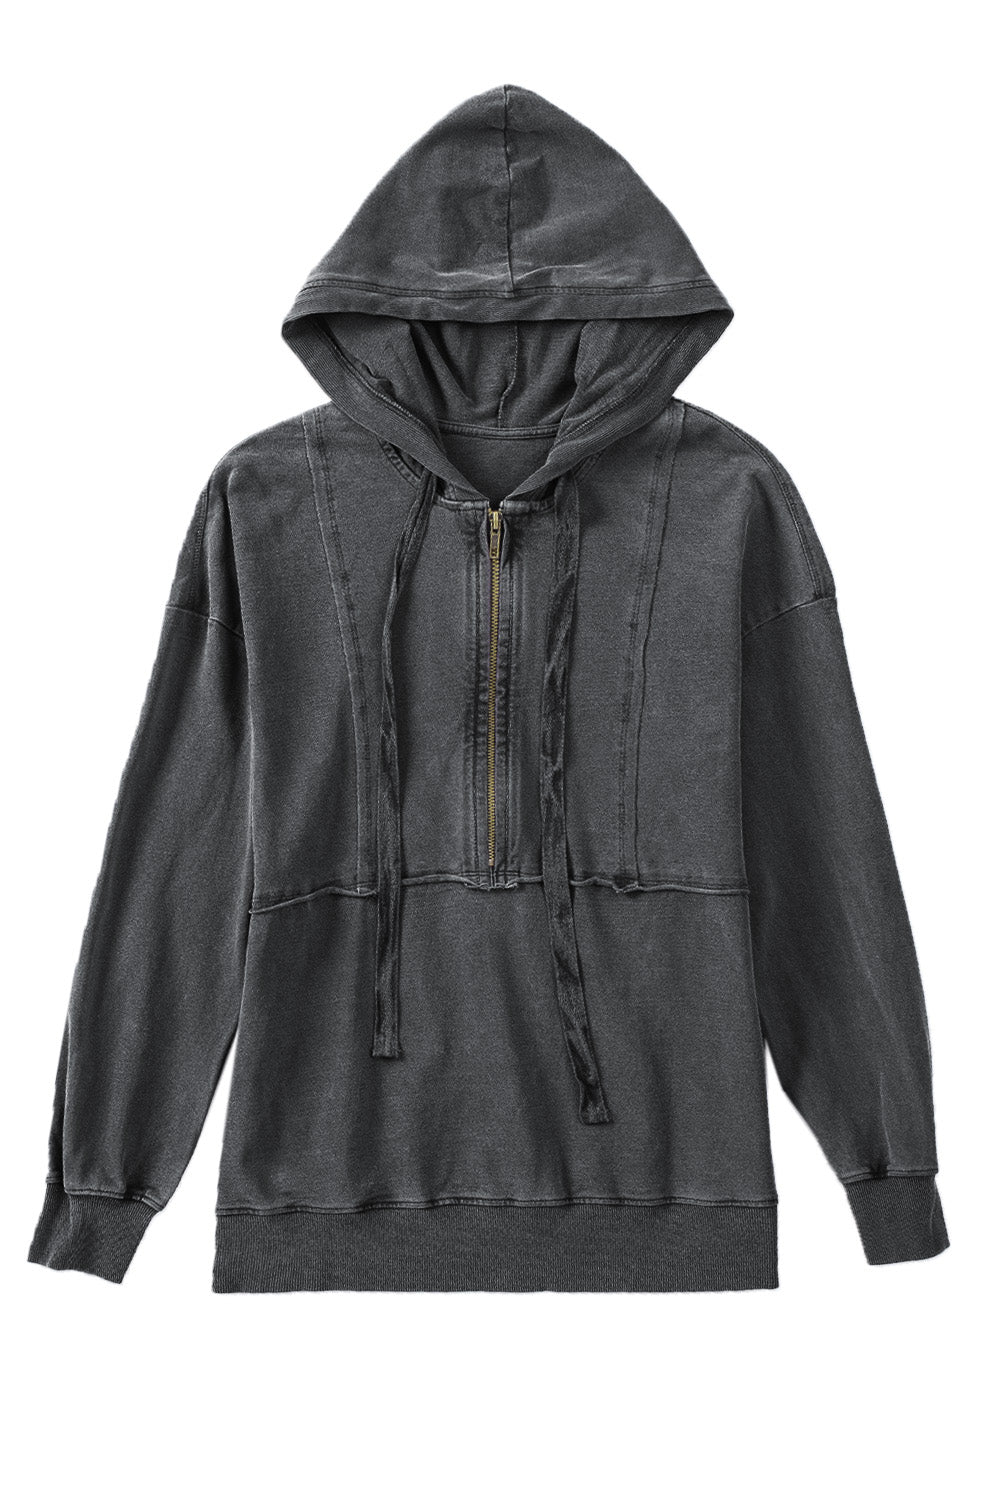 Gray Zipped Front Stitching Hooded Sweatshirt Sweatshirts & Hoodies JT's Designer Fashion